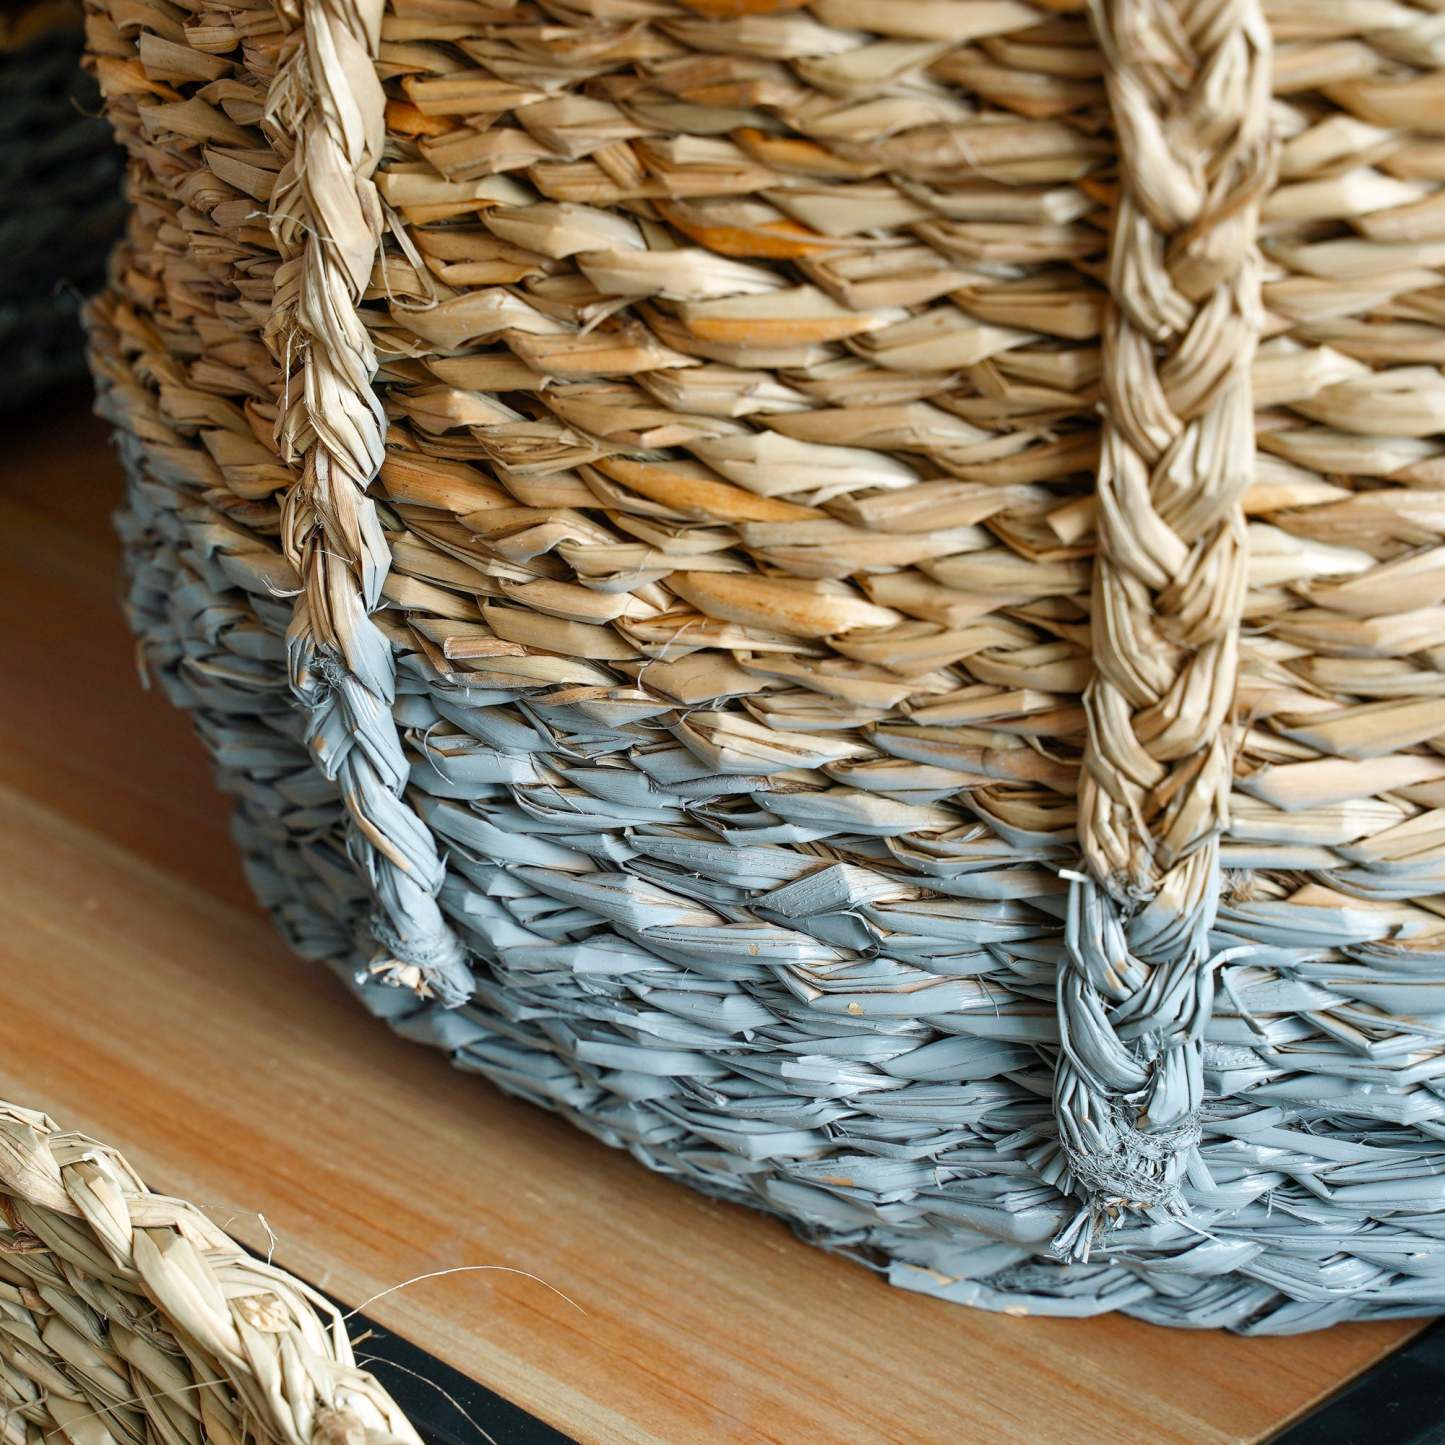 ecoHOUZE Seagrass Storage Basket With Handles - Grey (Small)